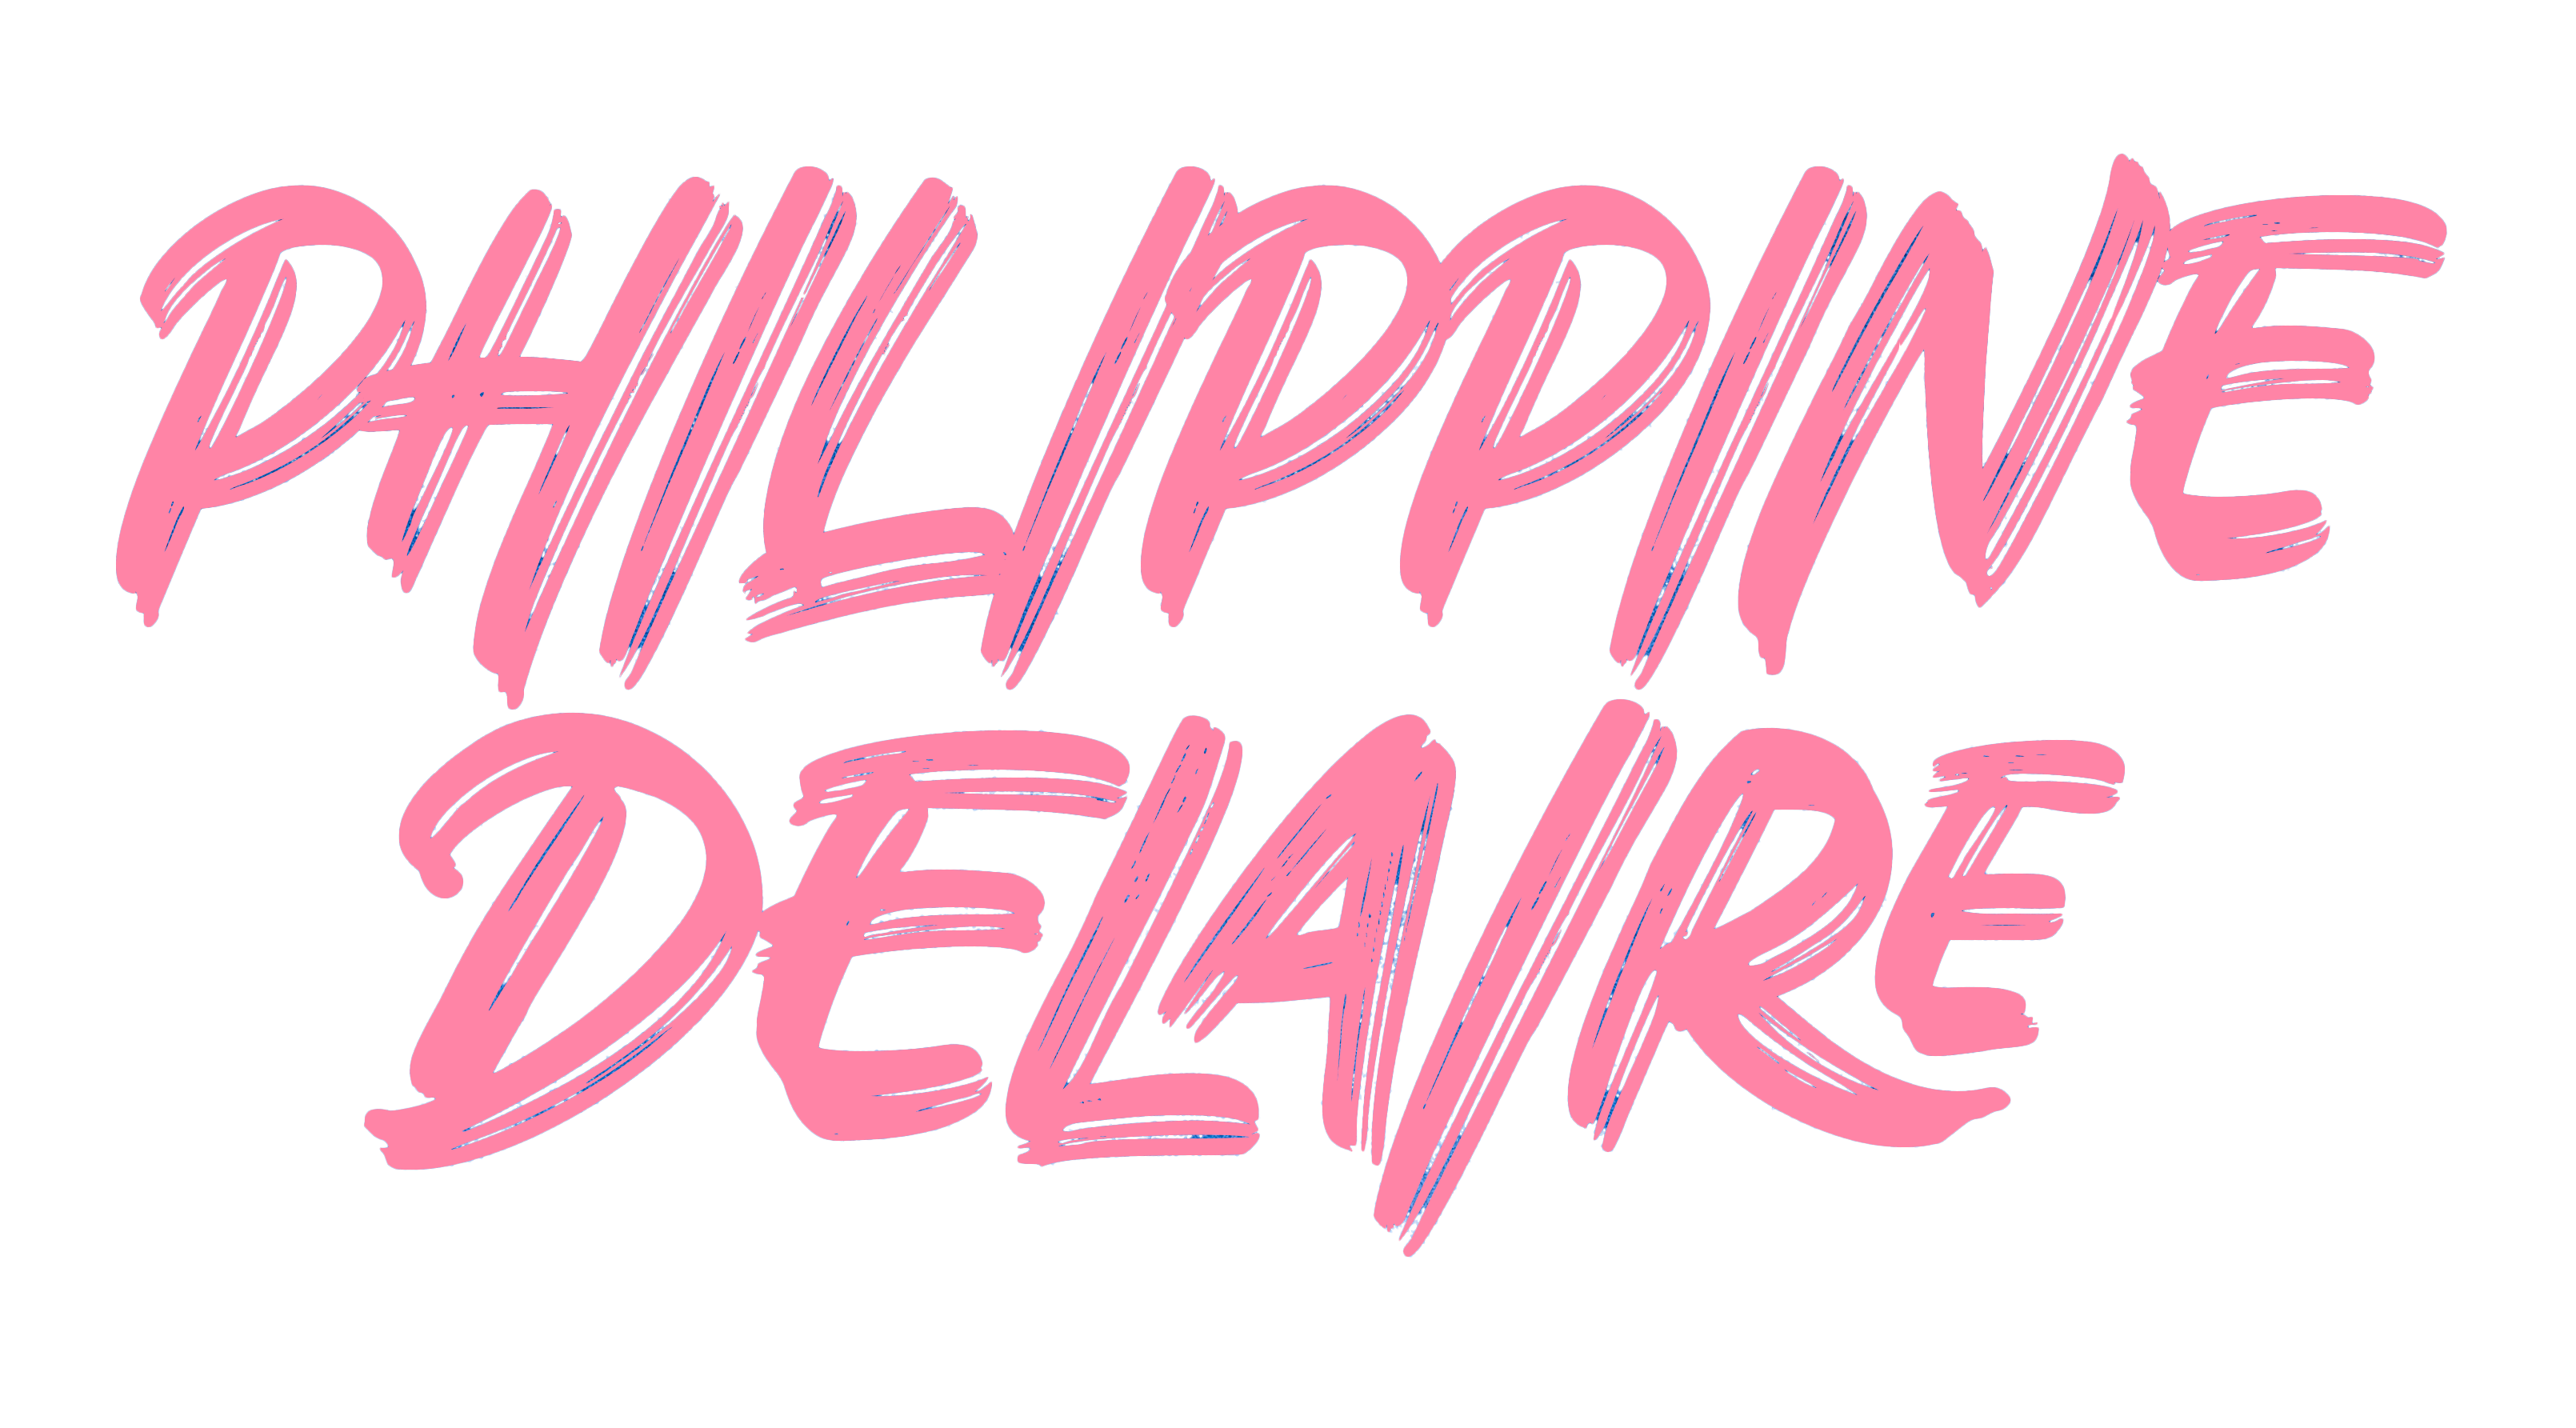 Philippine Delaire